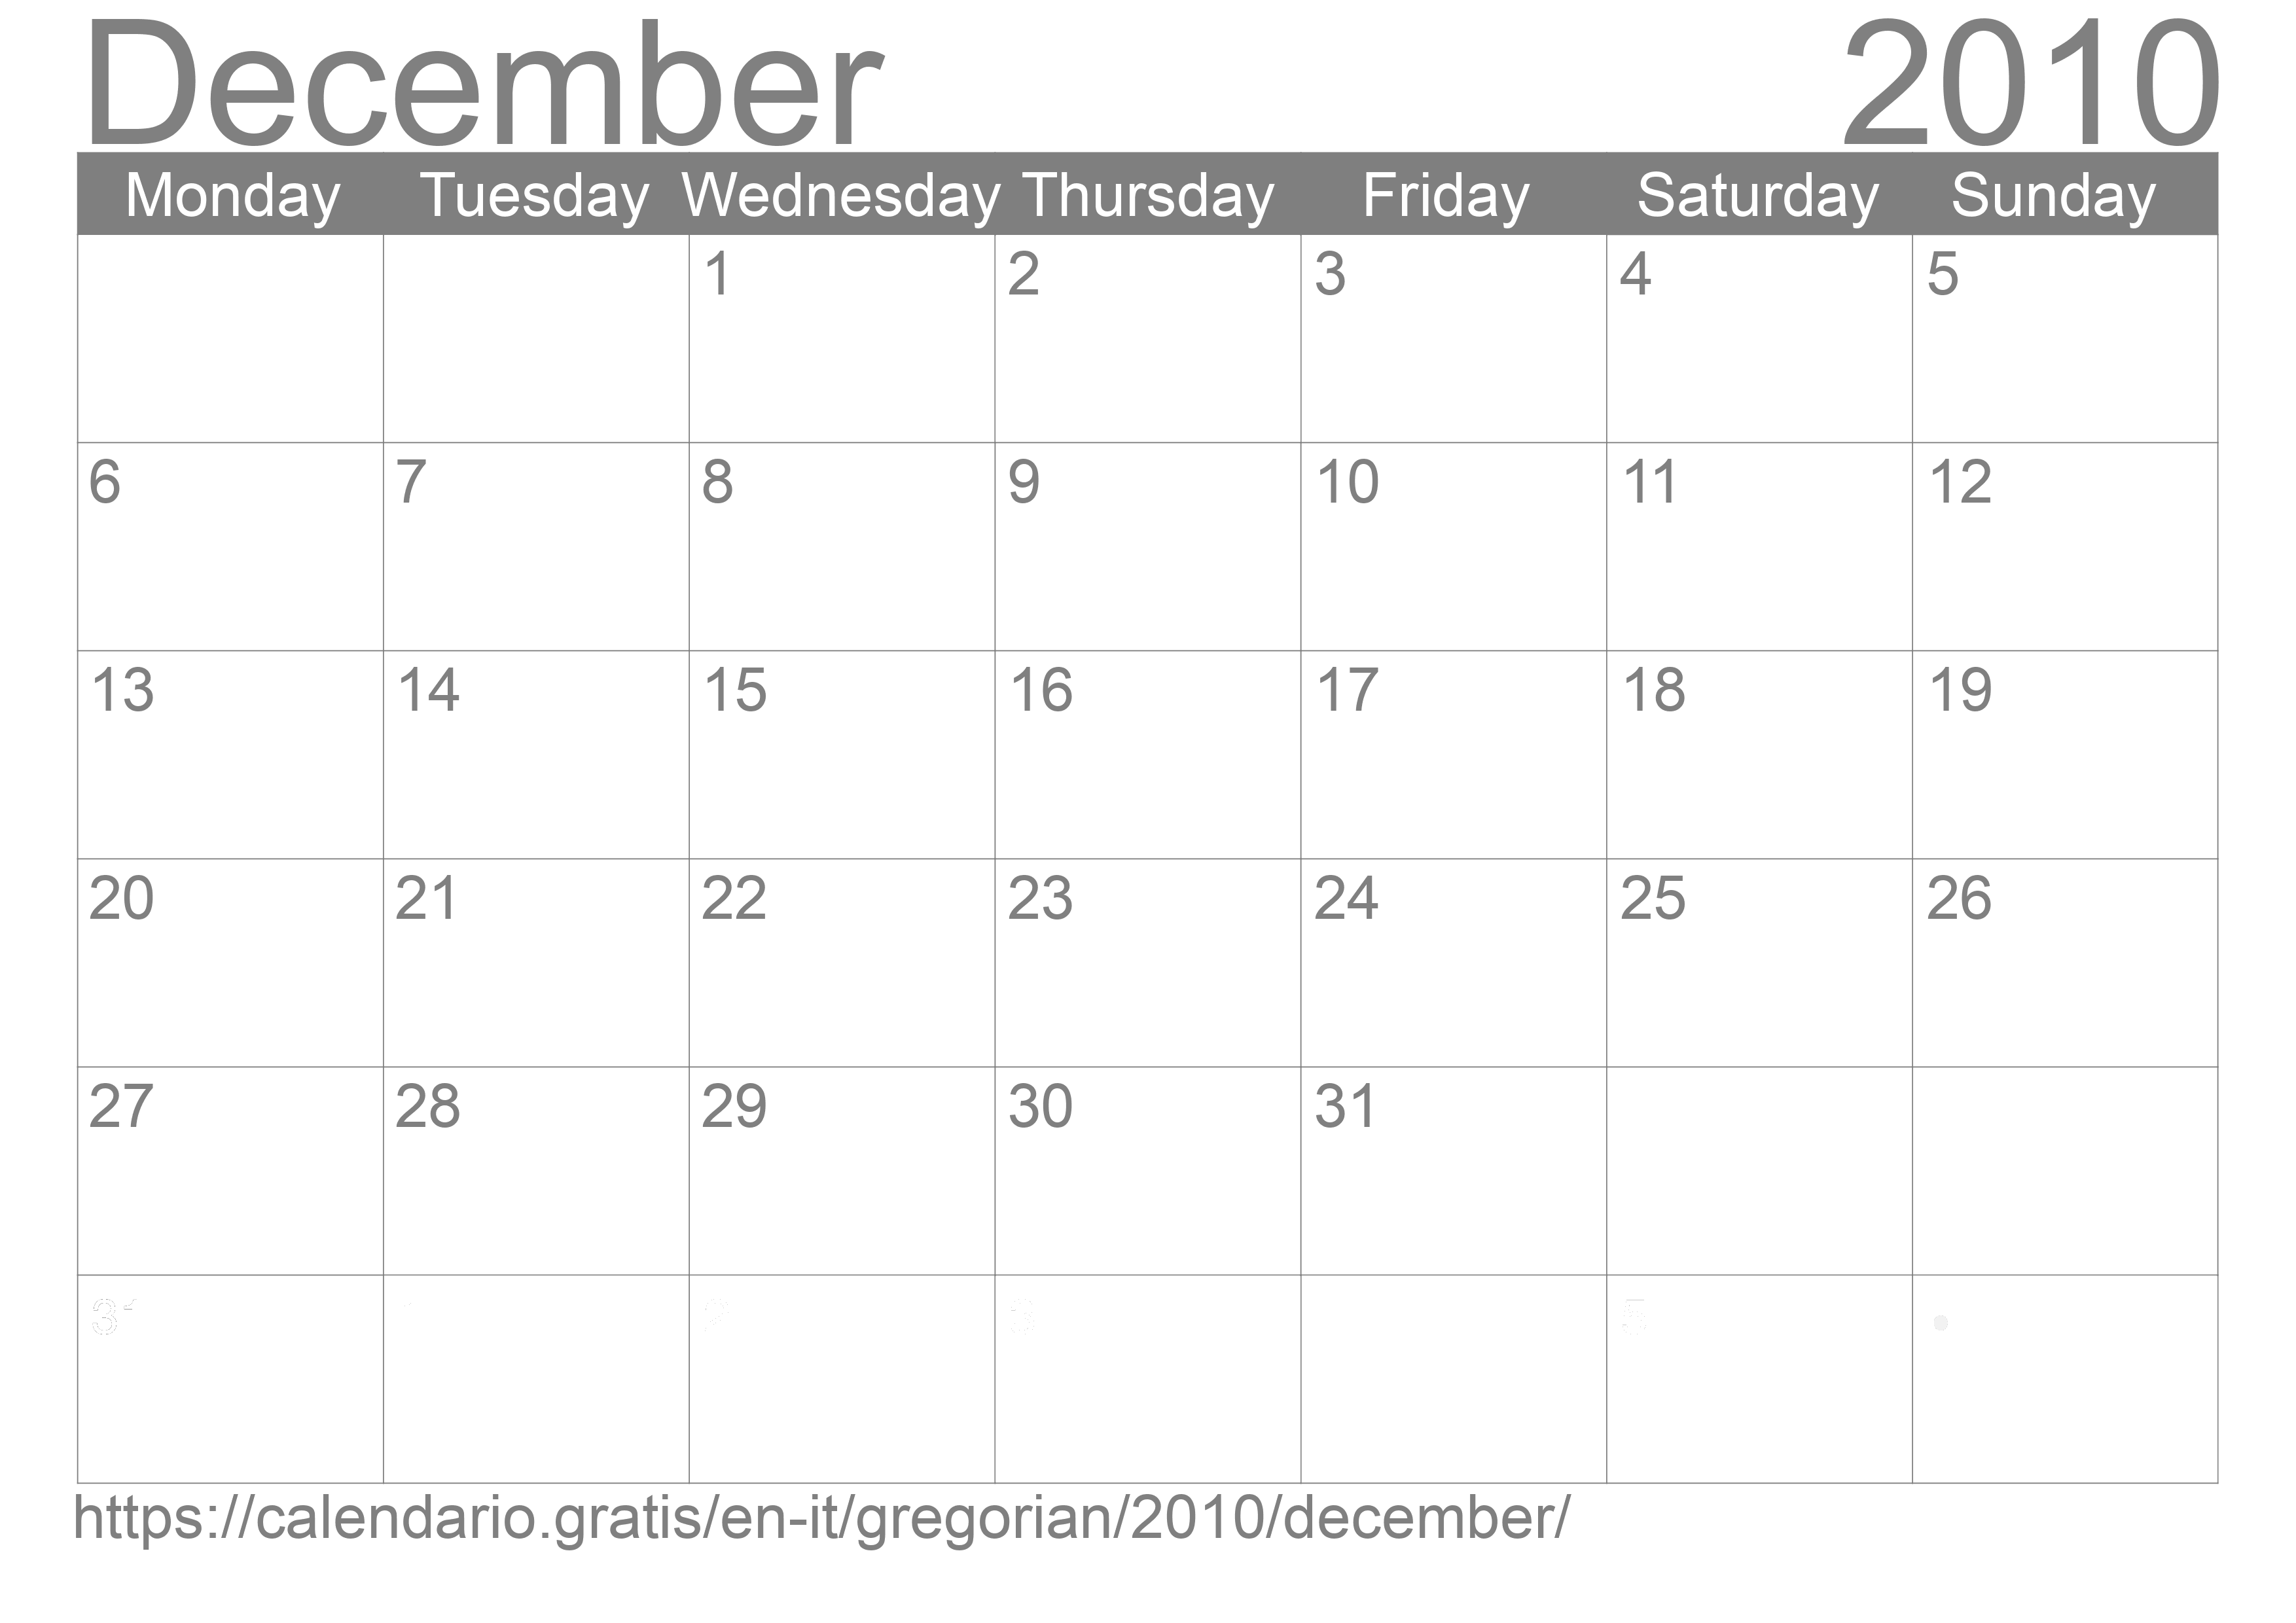 Calendar December 2010 to print